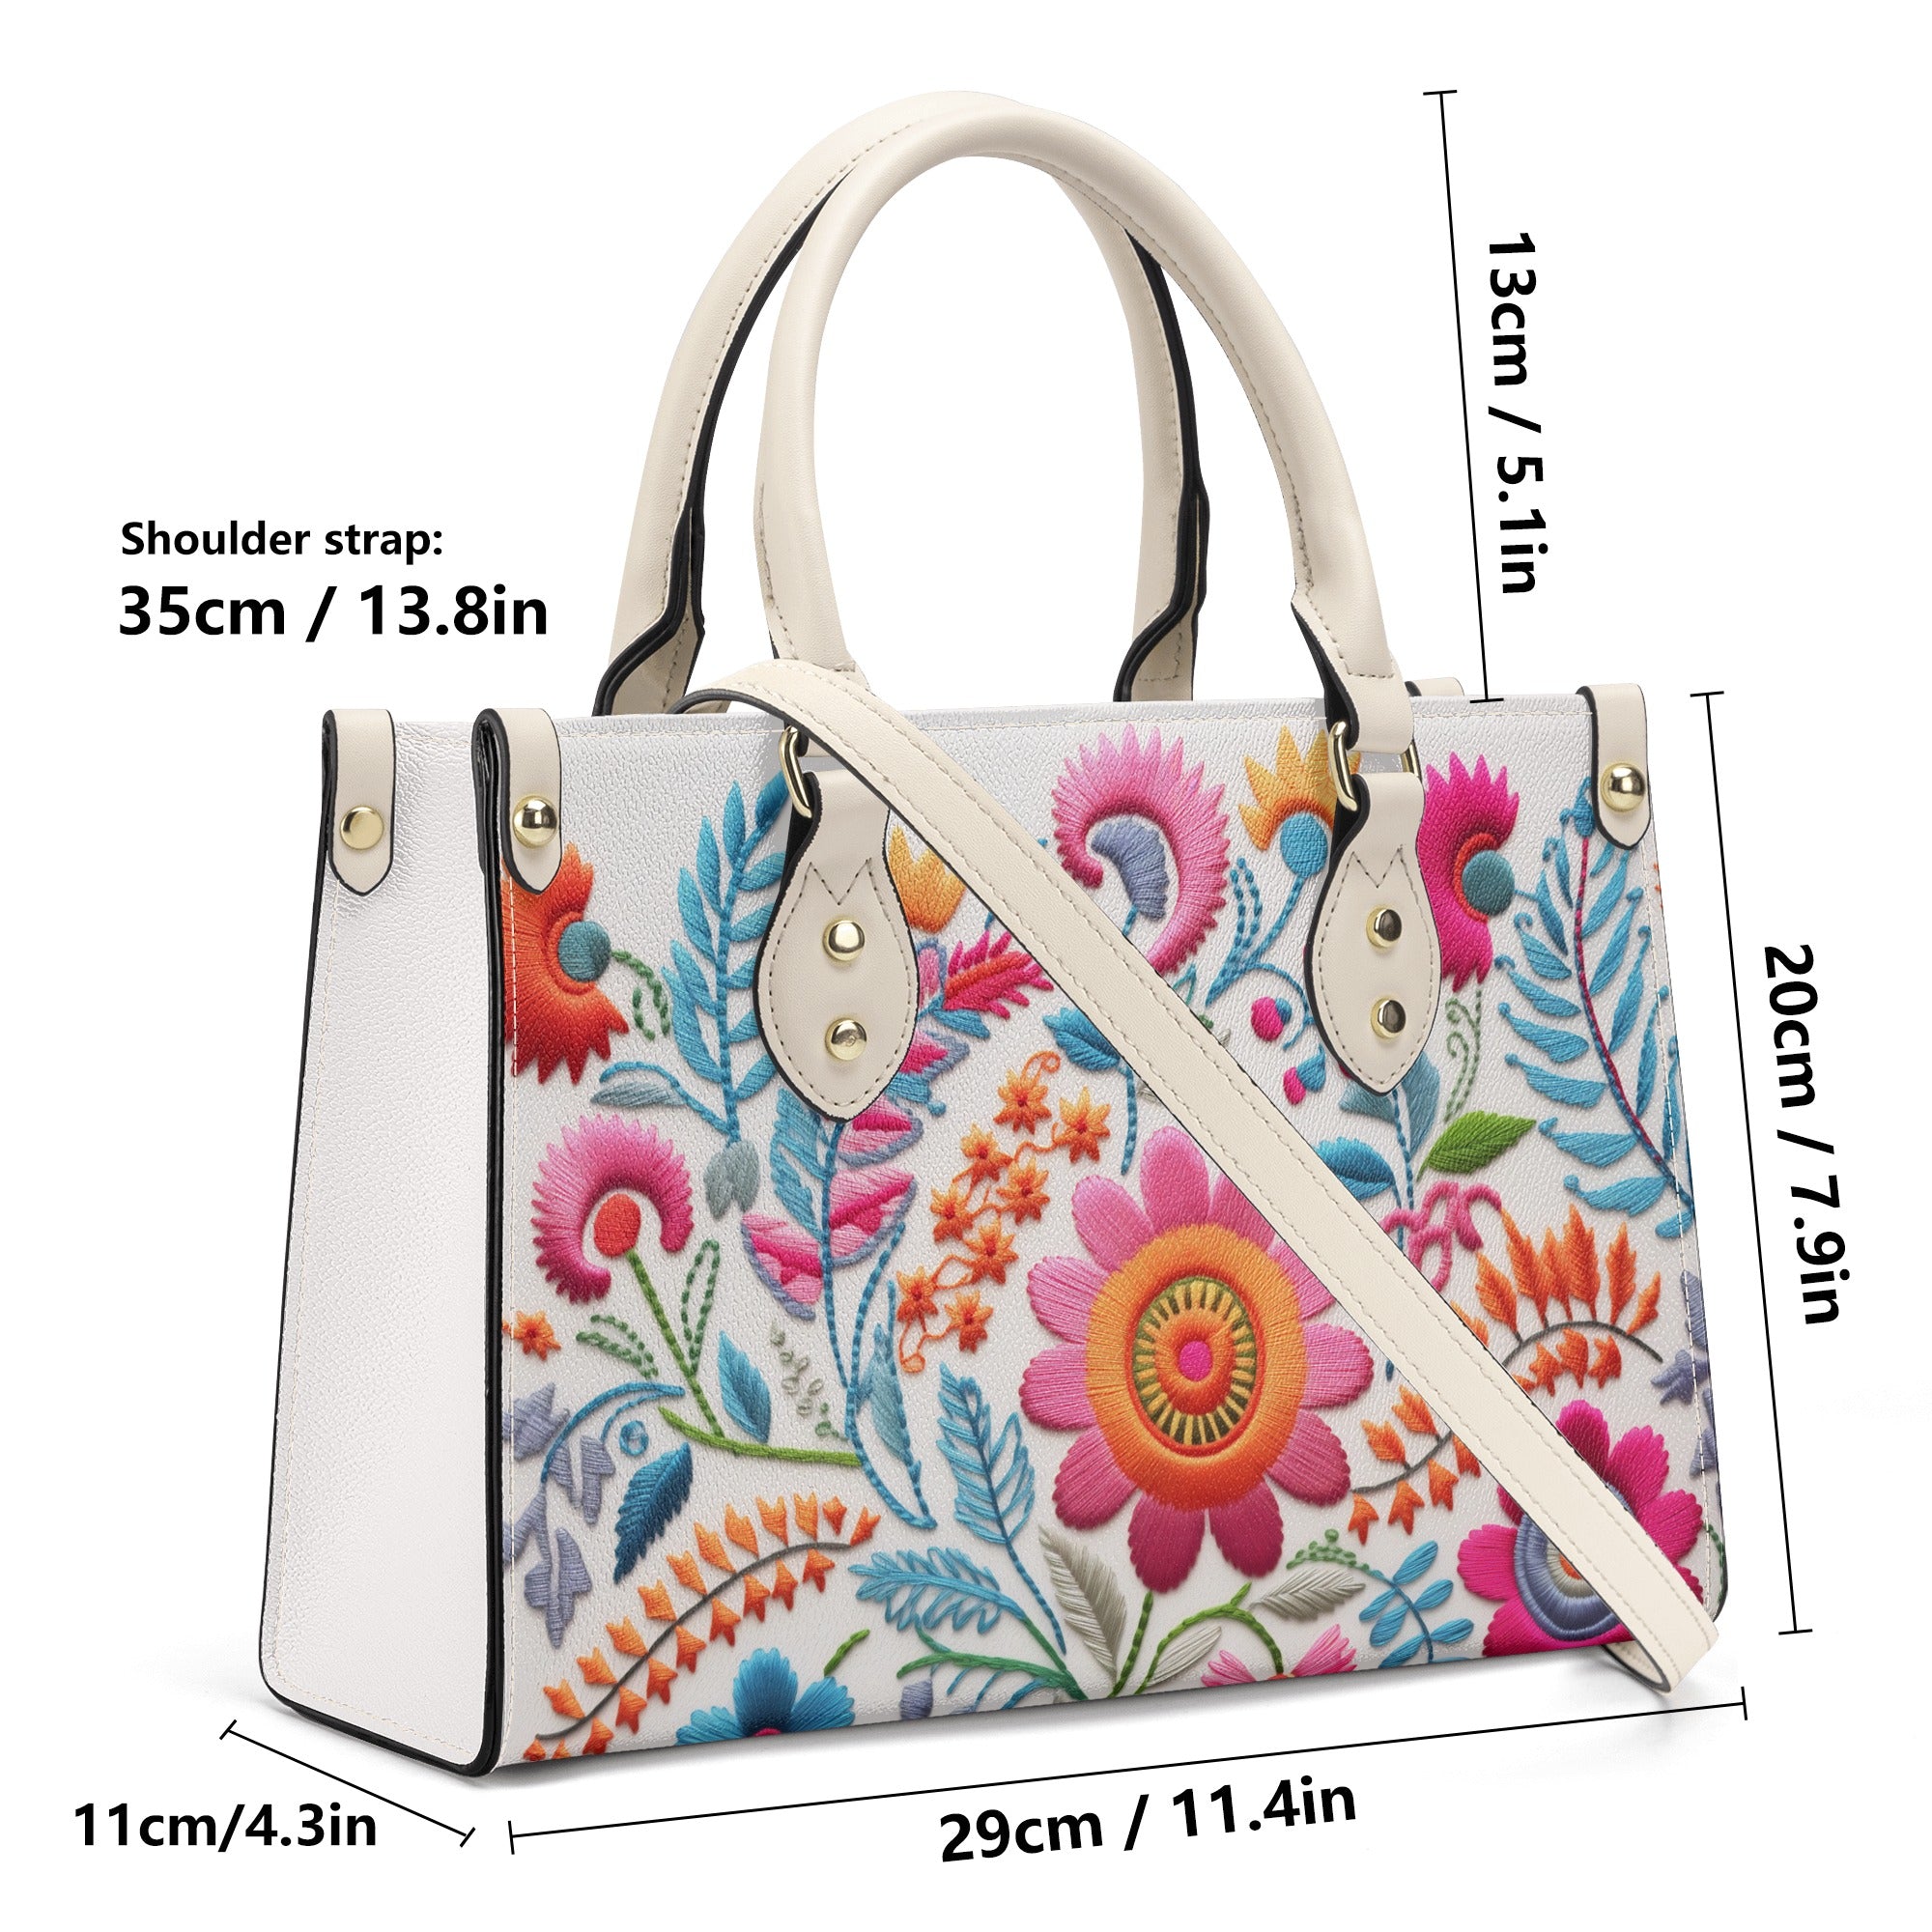 Embroidered Blossom Print Handbag - Timeless & Chic